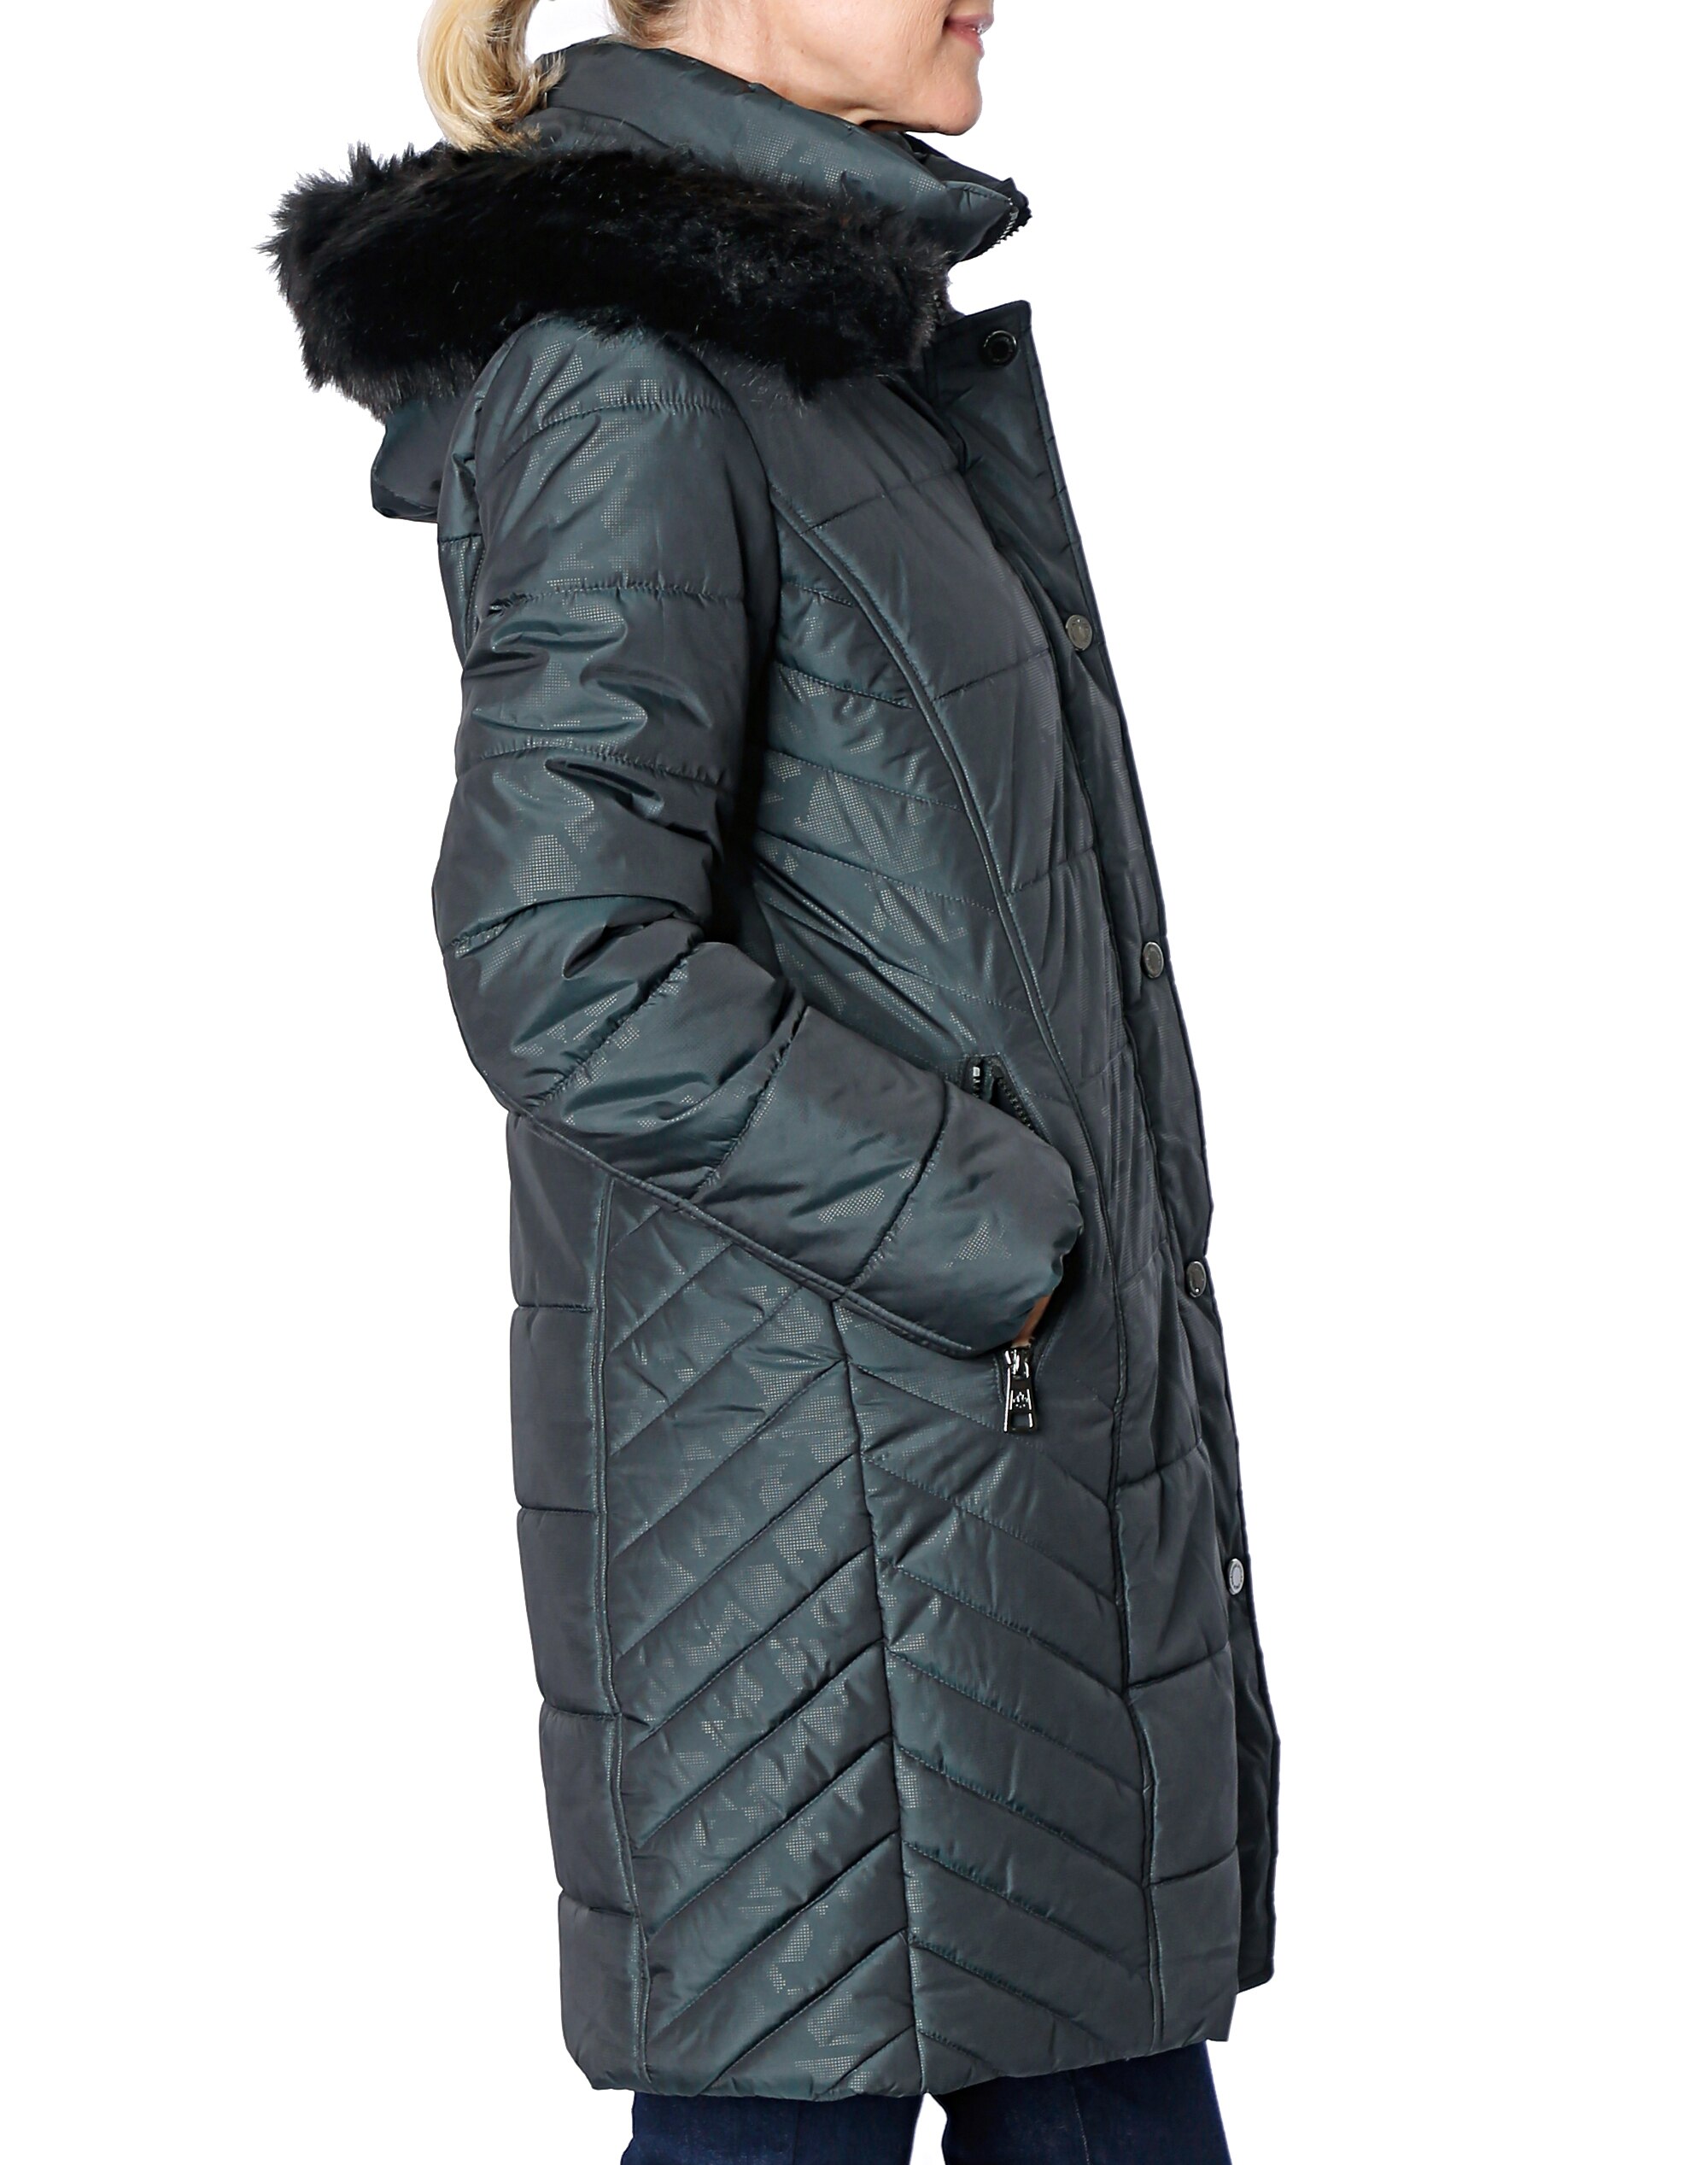 northside winter coats